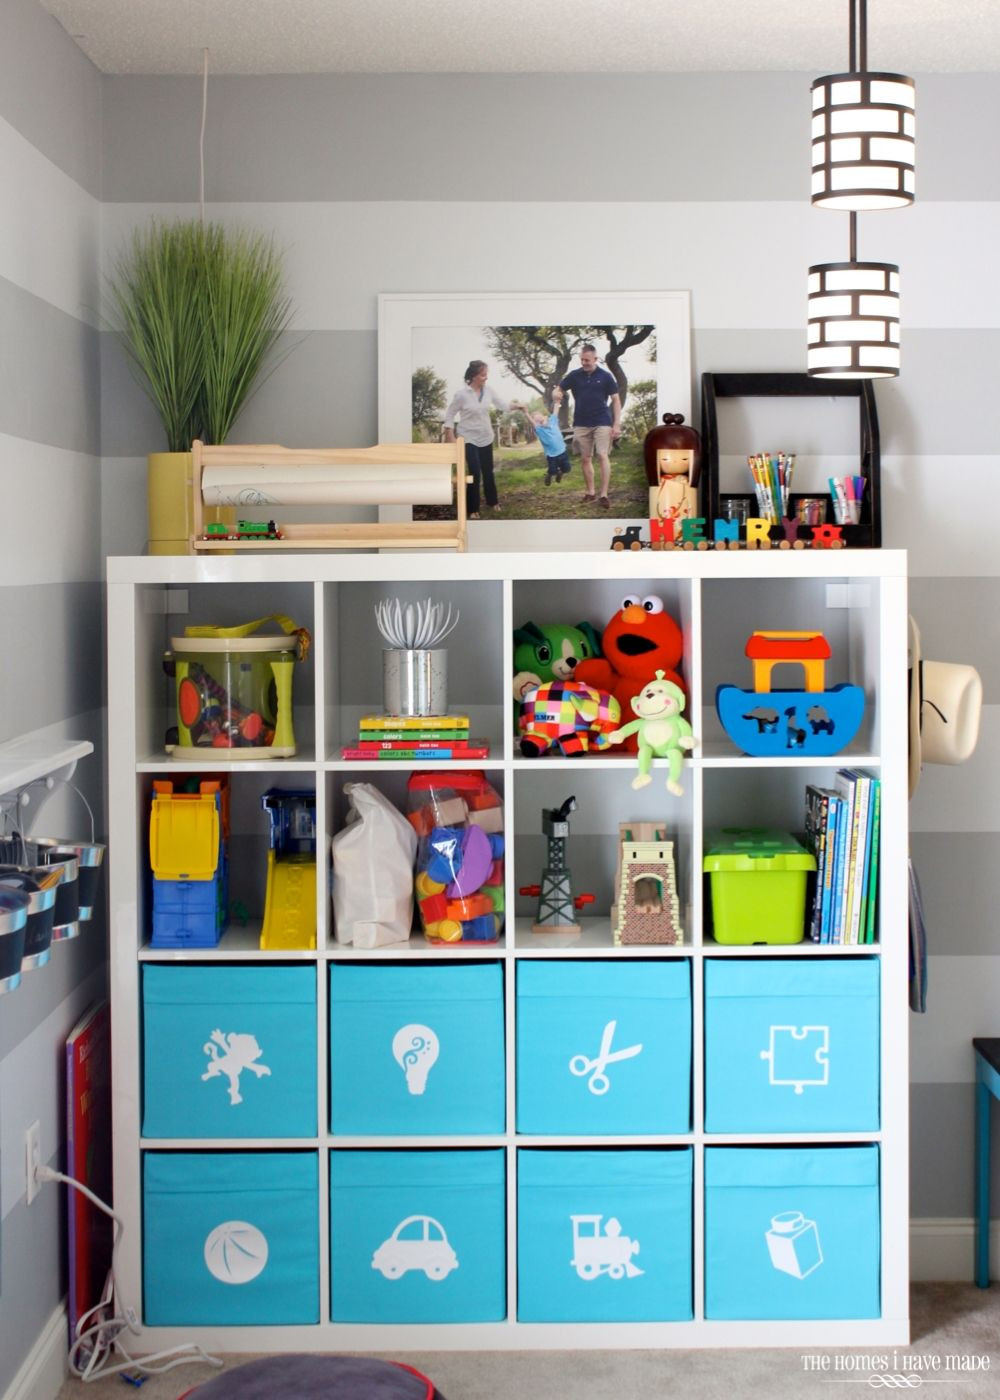 Ikea Kids Toy Storage
 Different Ways To Use & Style Ikea s Versatile Expedit Shelf